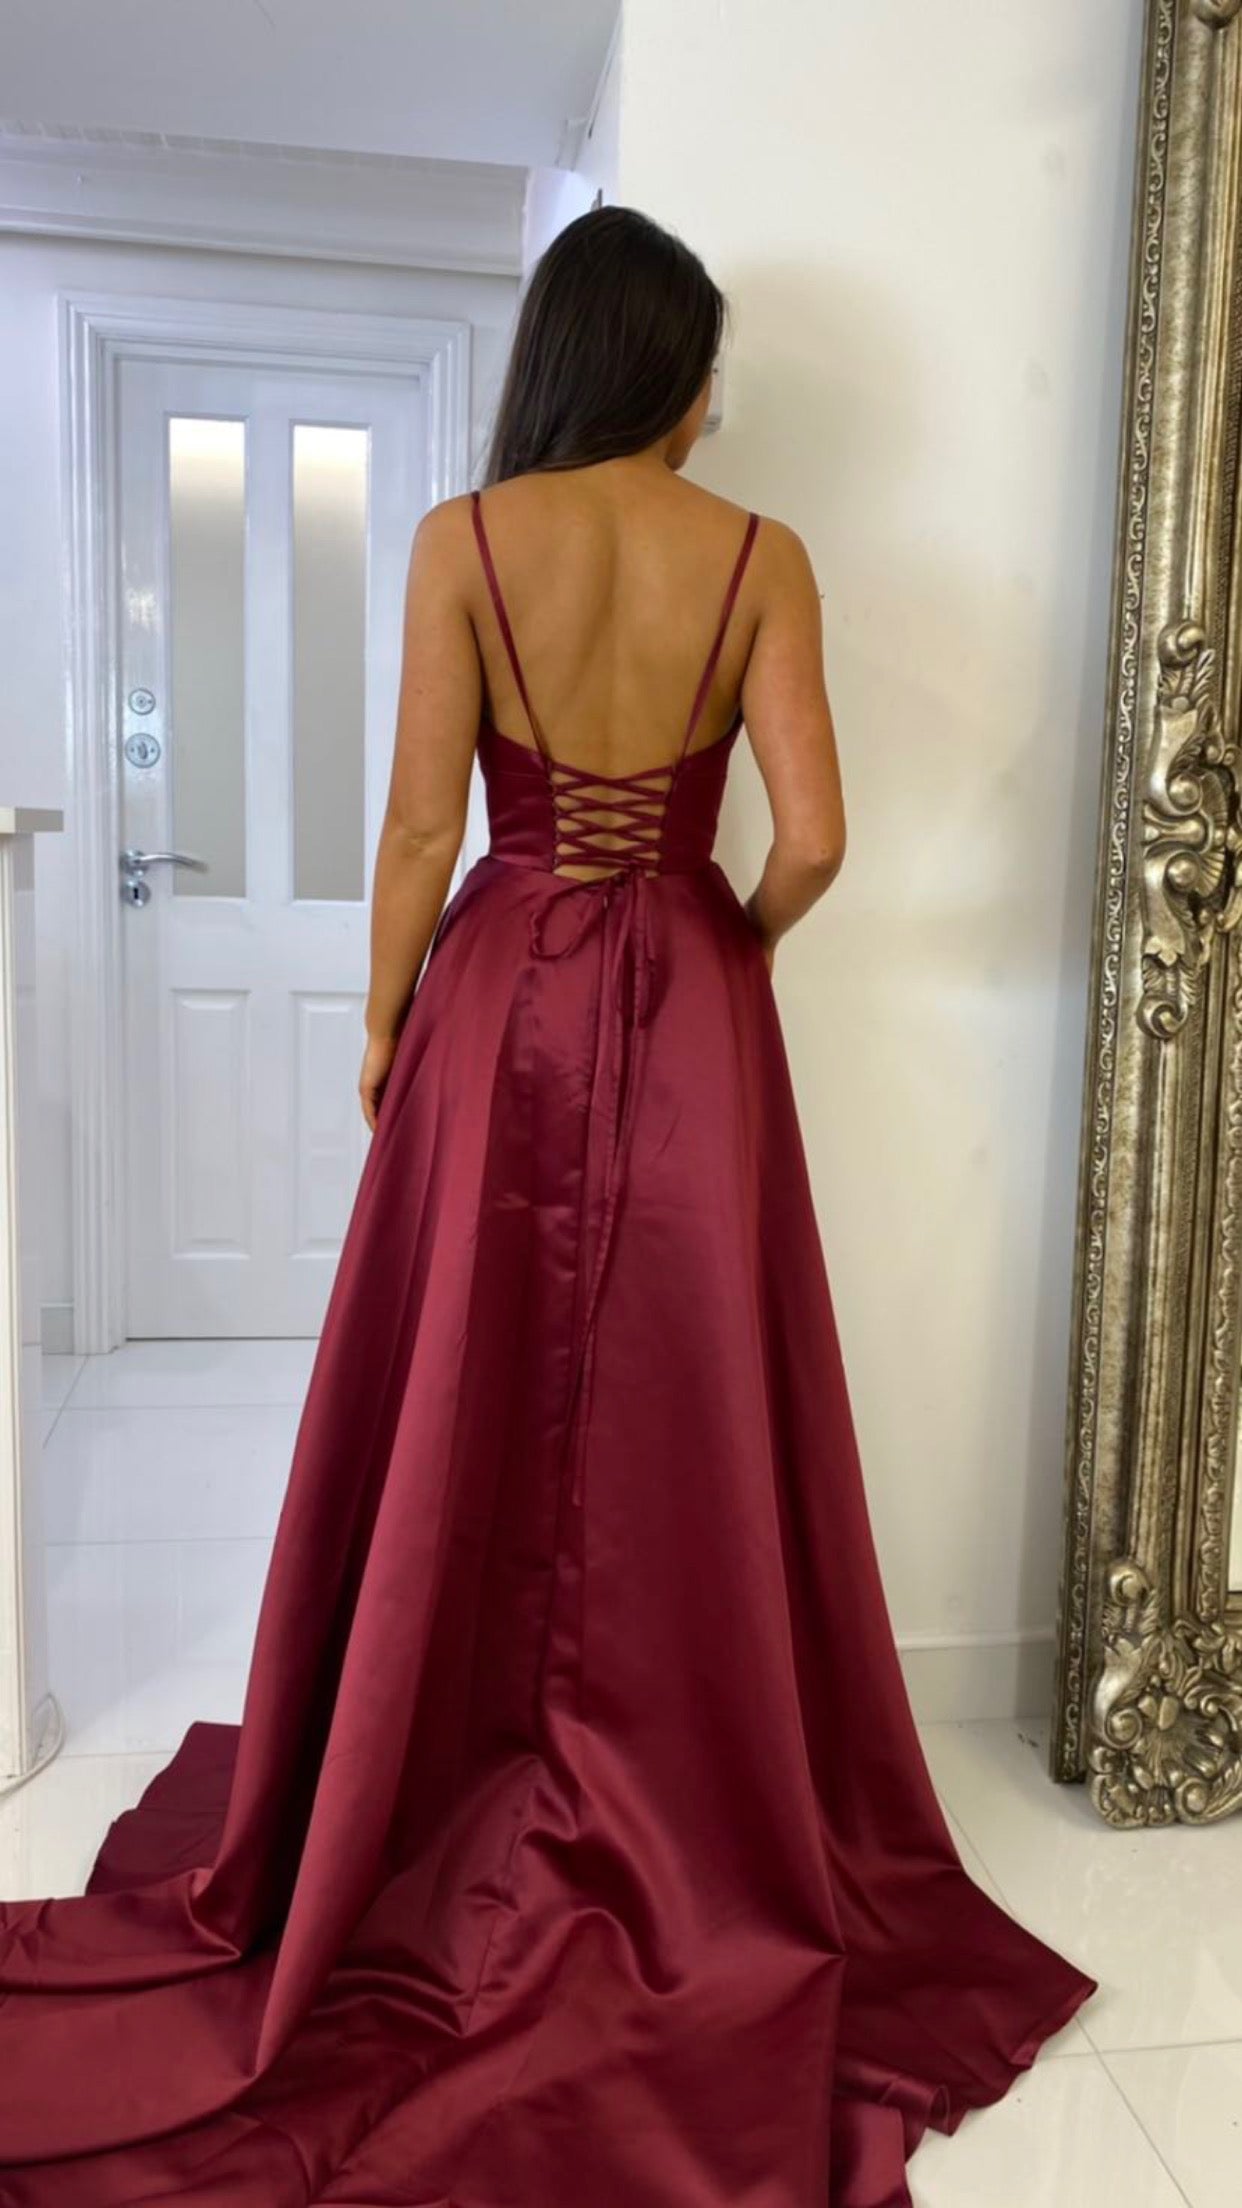 Burgundy Satin Low Cut Corset Ball Gown Prom Dress